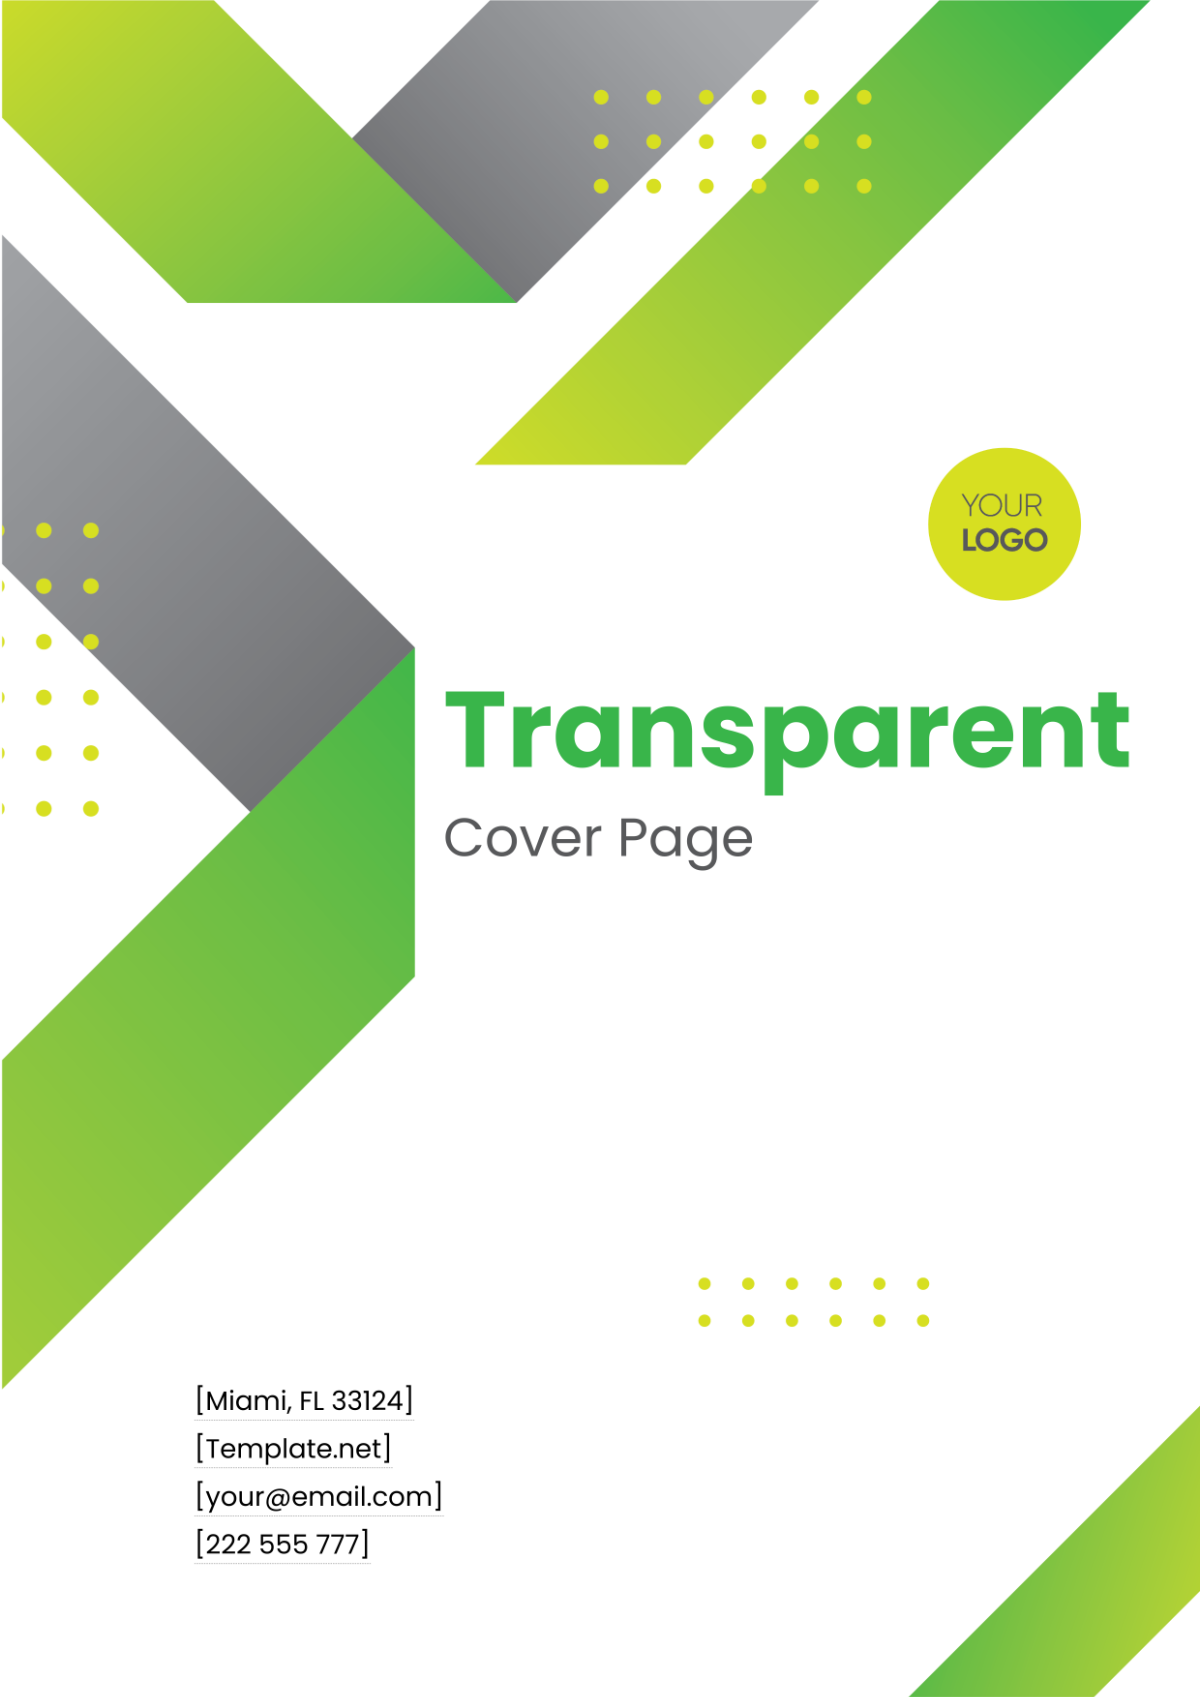 Transparent Cover Page Logo